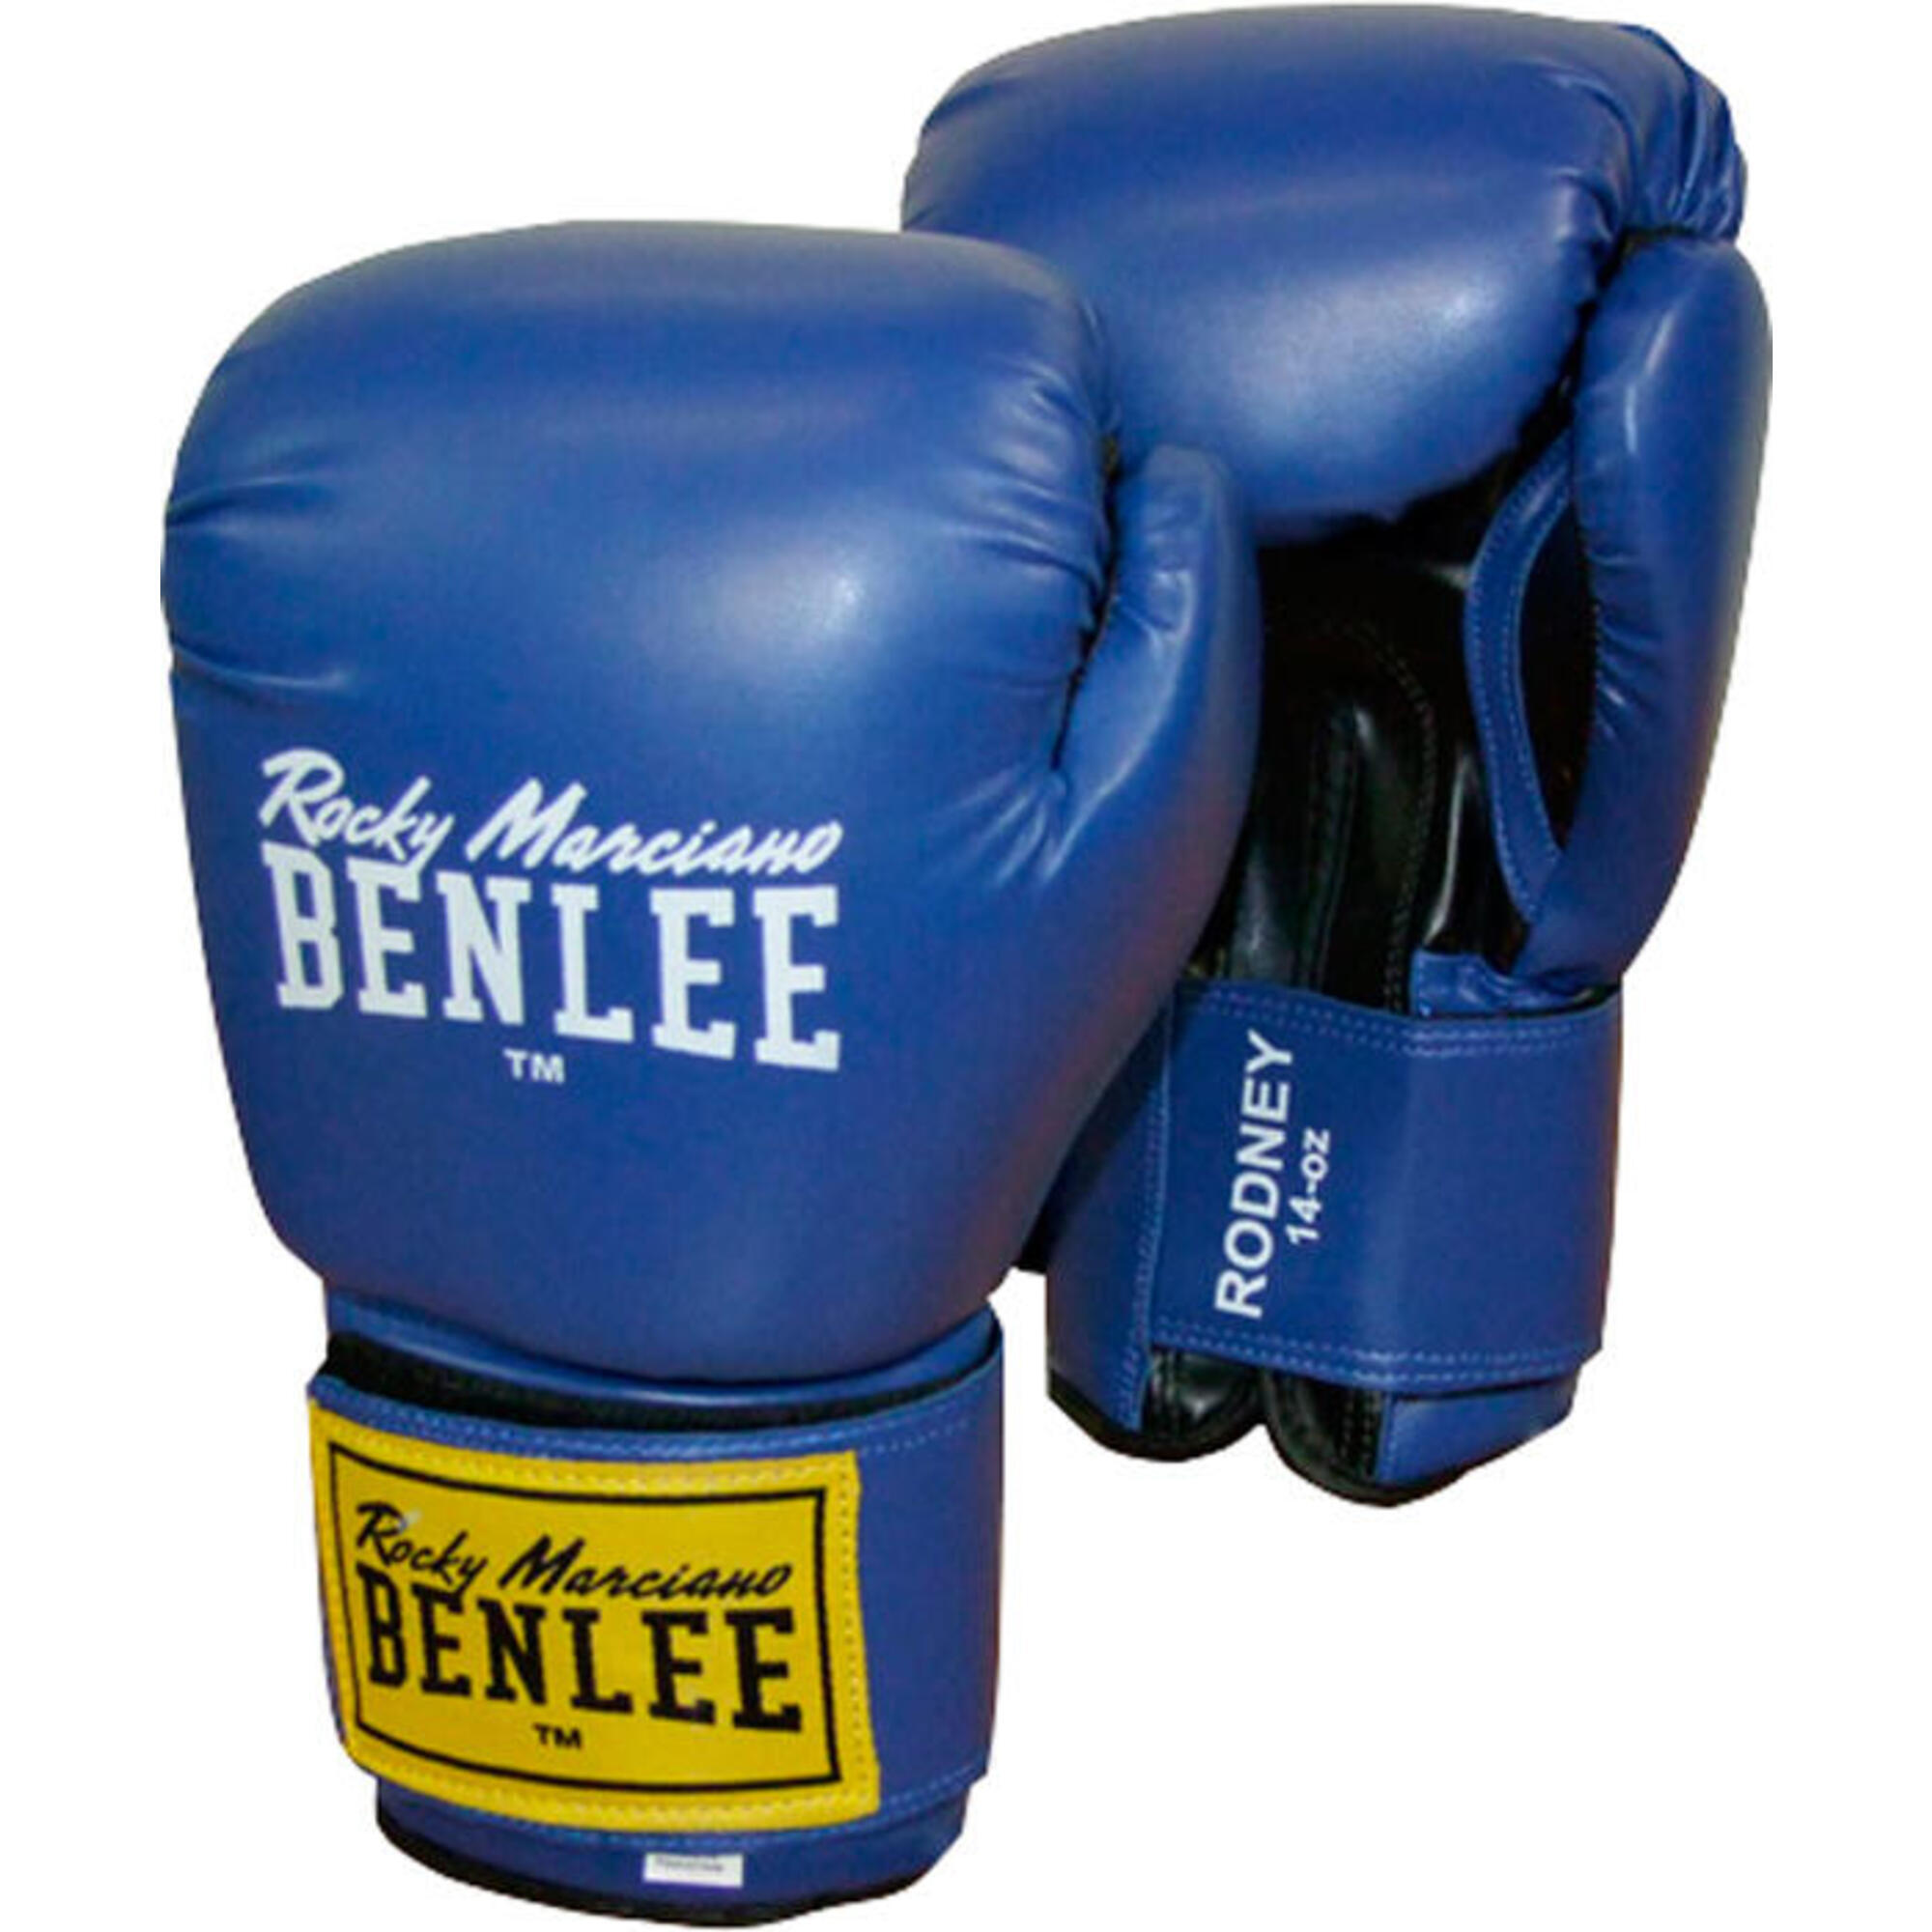 Benlee Boxhandschuhe Rodney 10 oz blau/schwarz